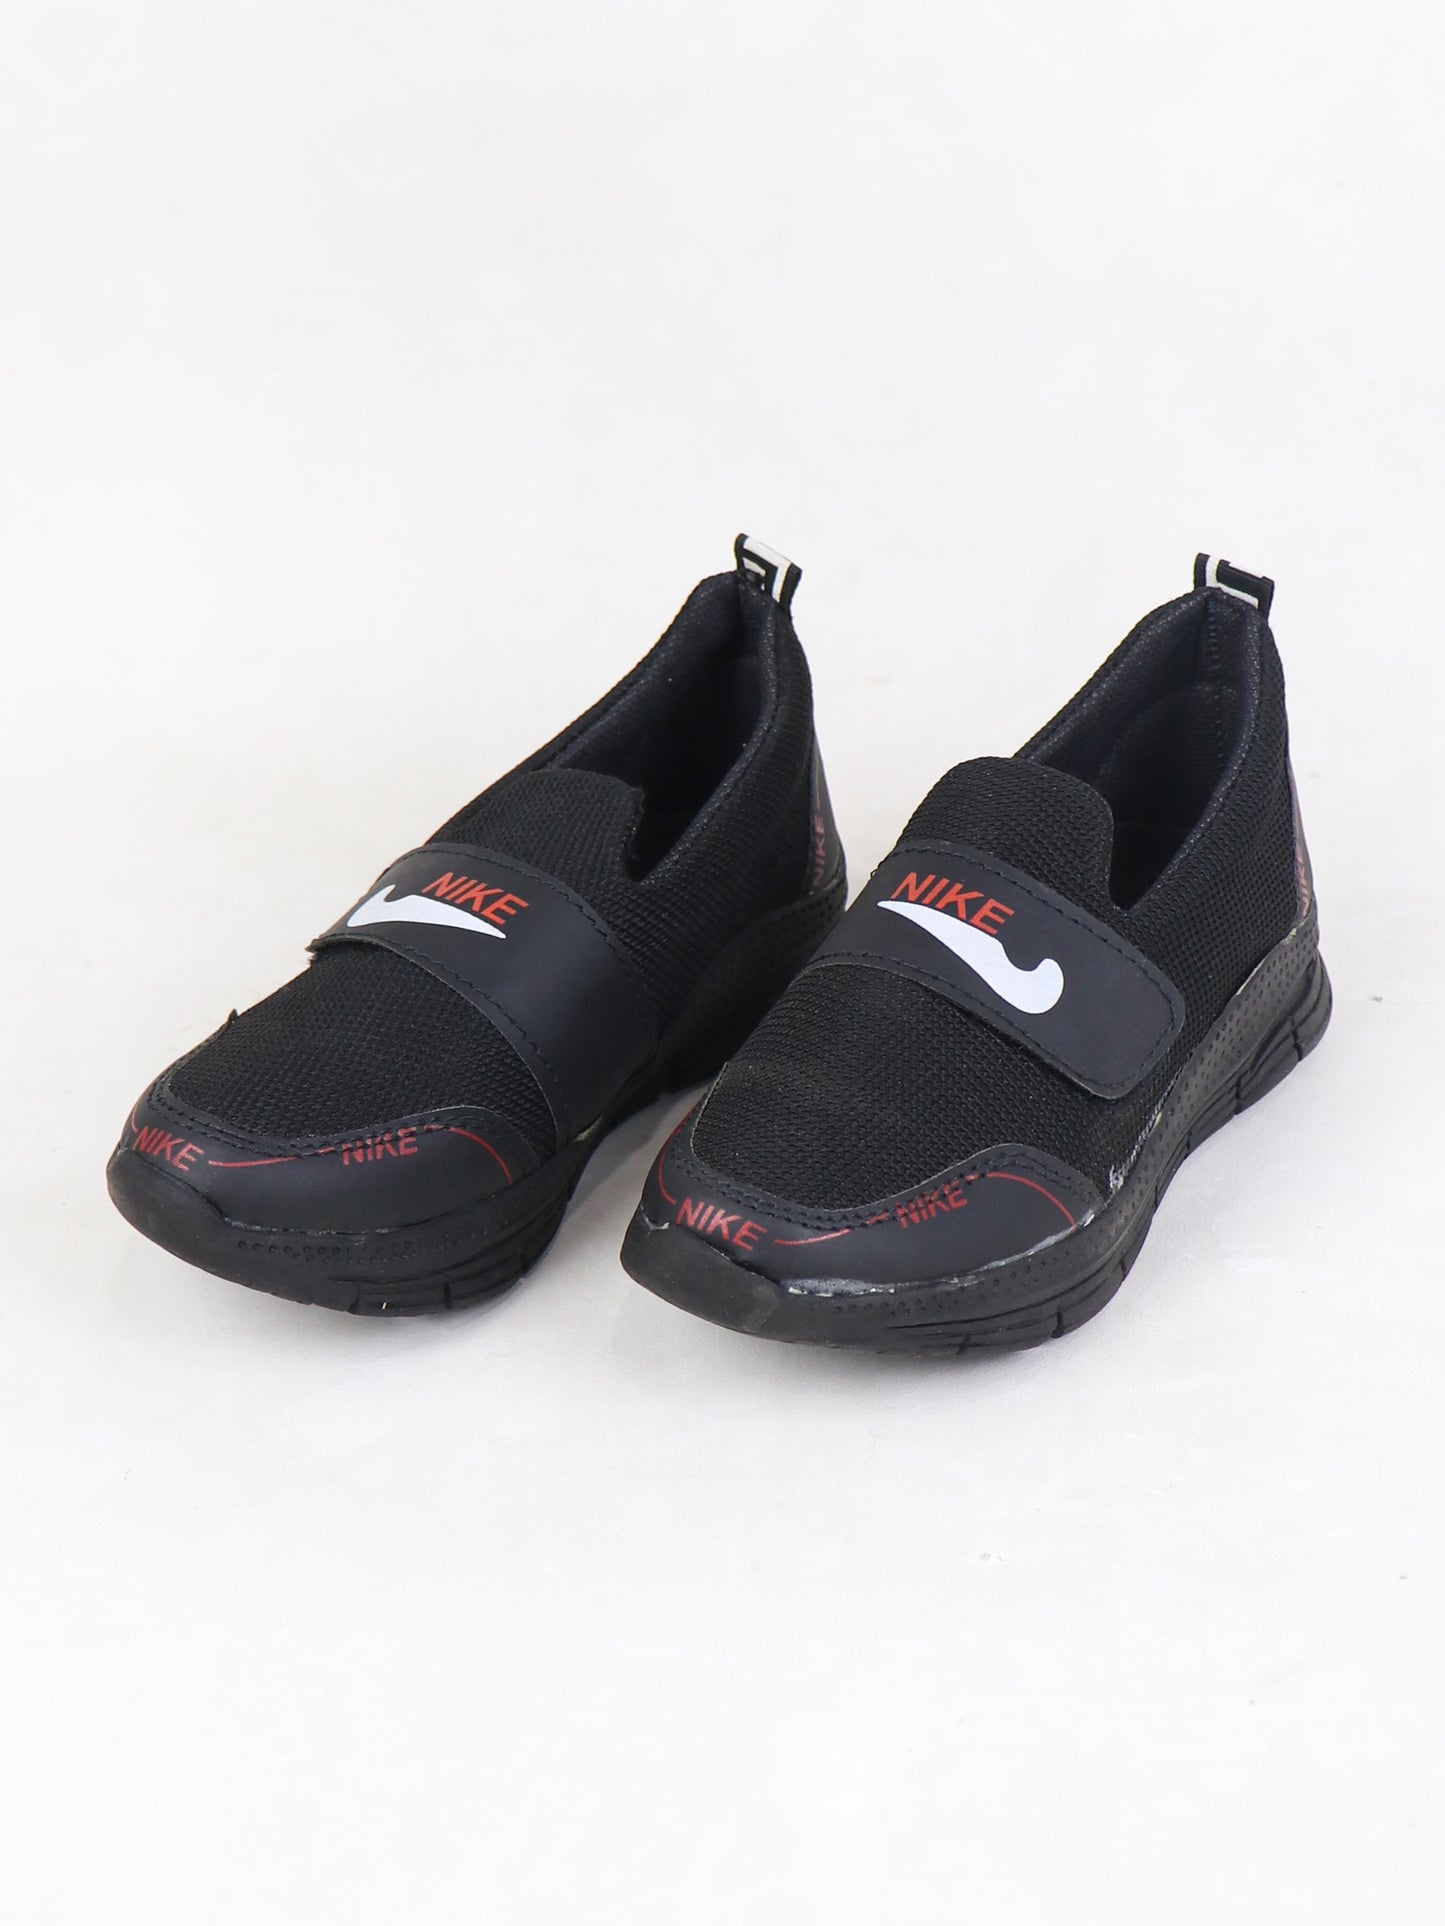 BJ16 Boys Shoes 8Yrs - 12Yrs NK Black